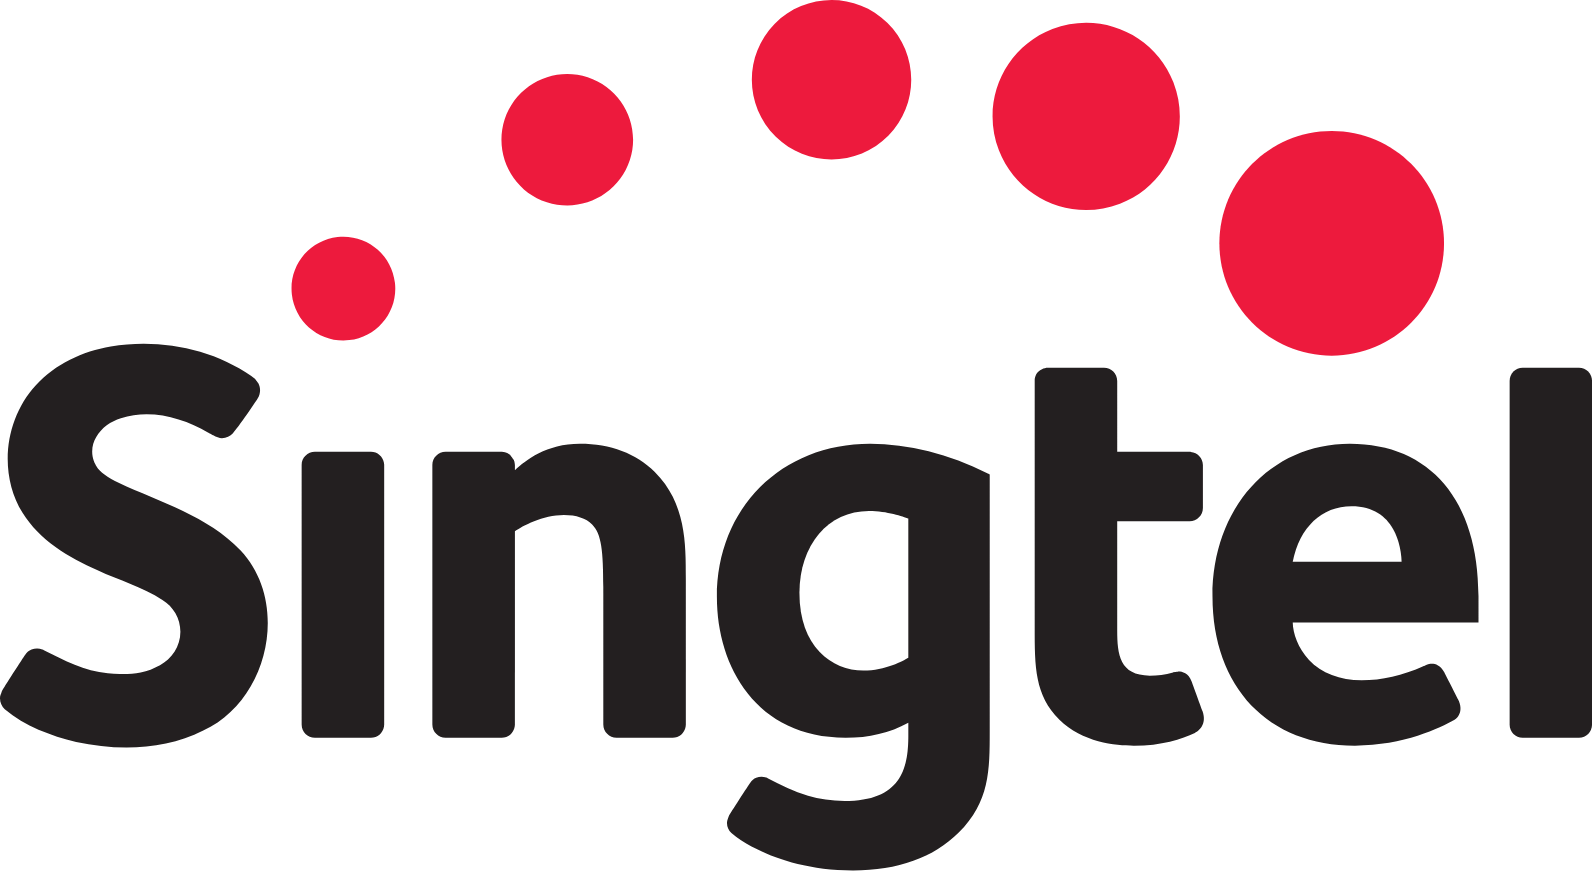 Singtel it companies in Singapore